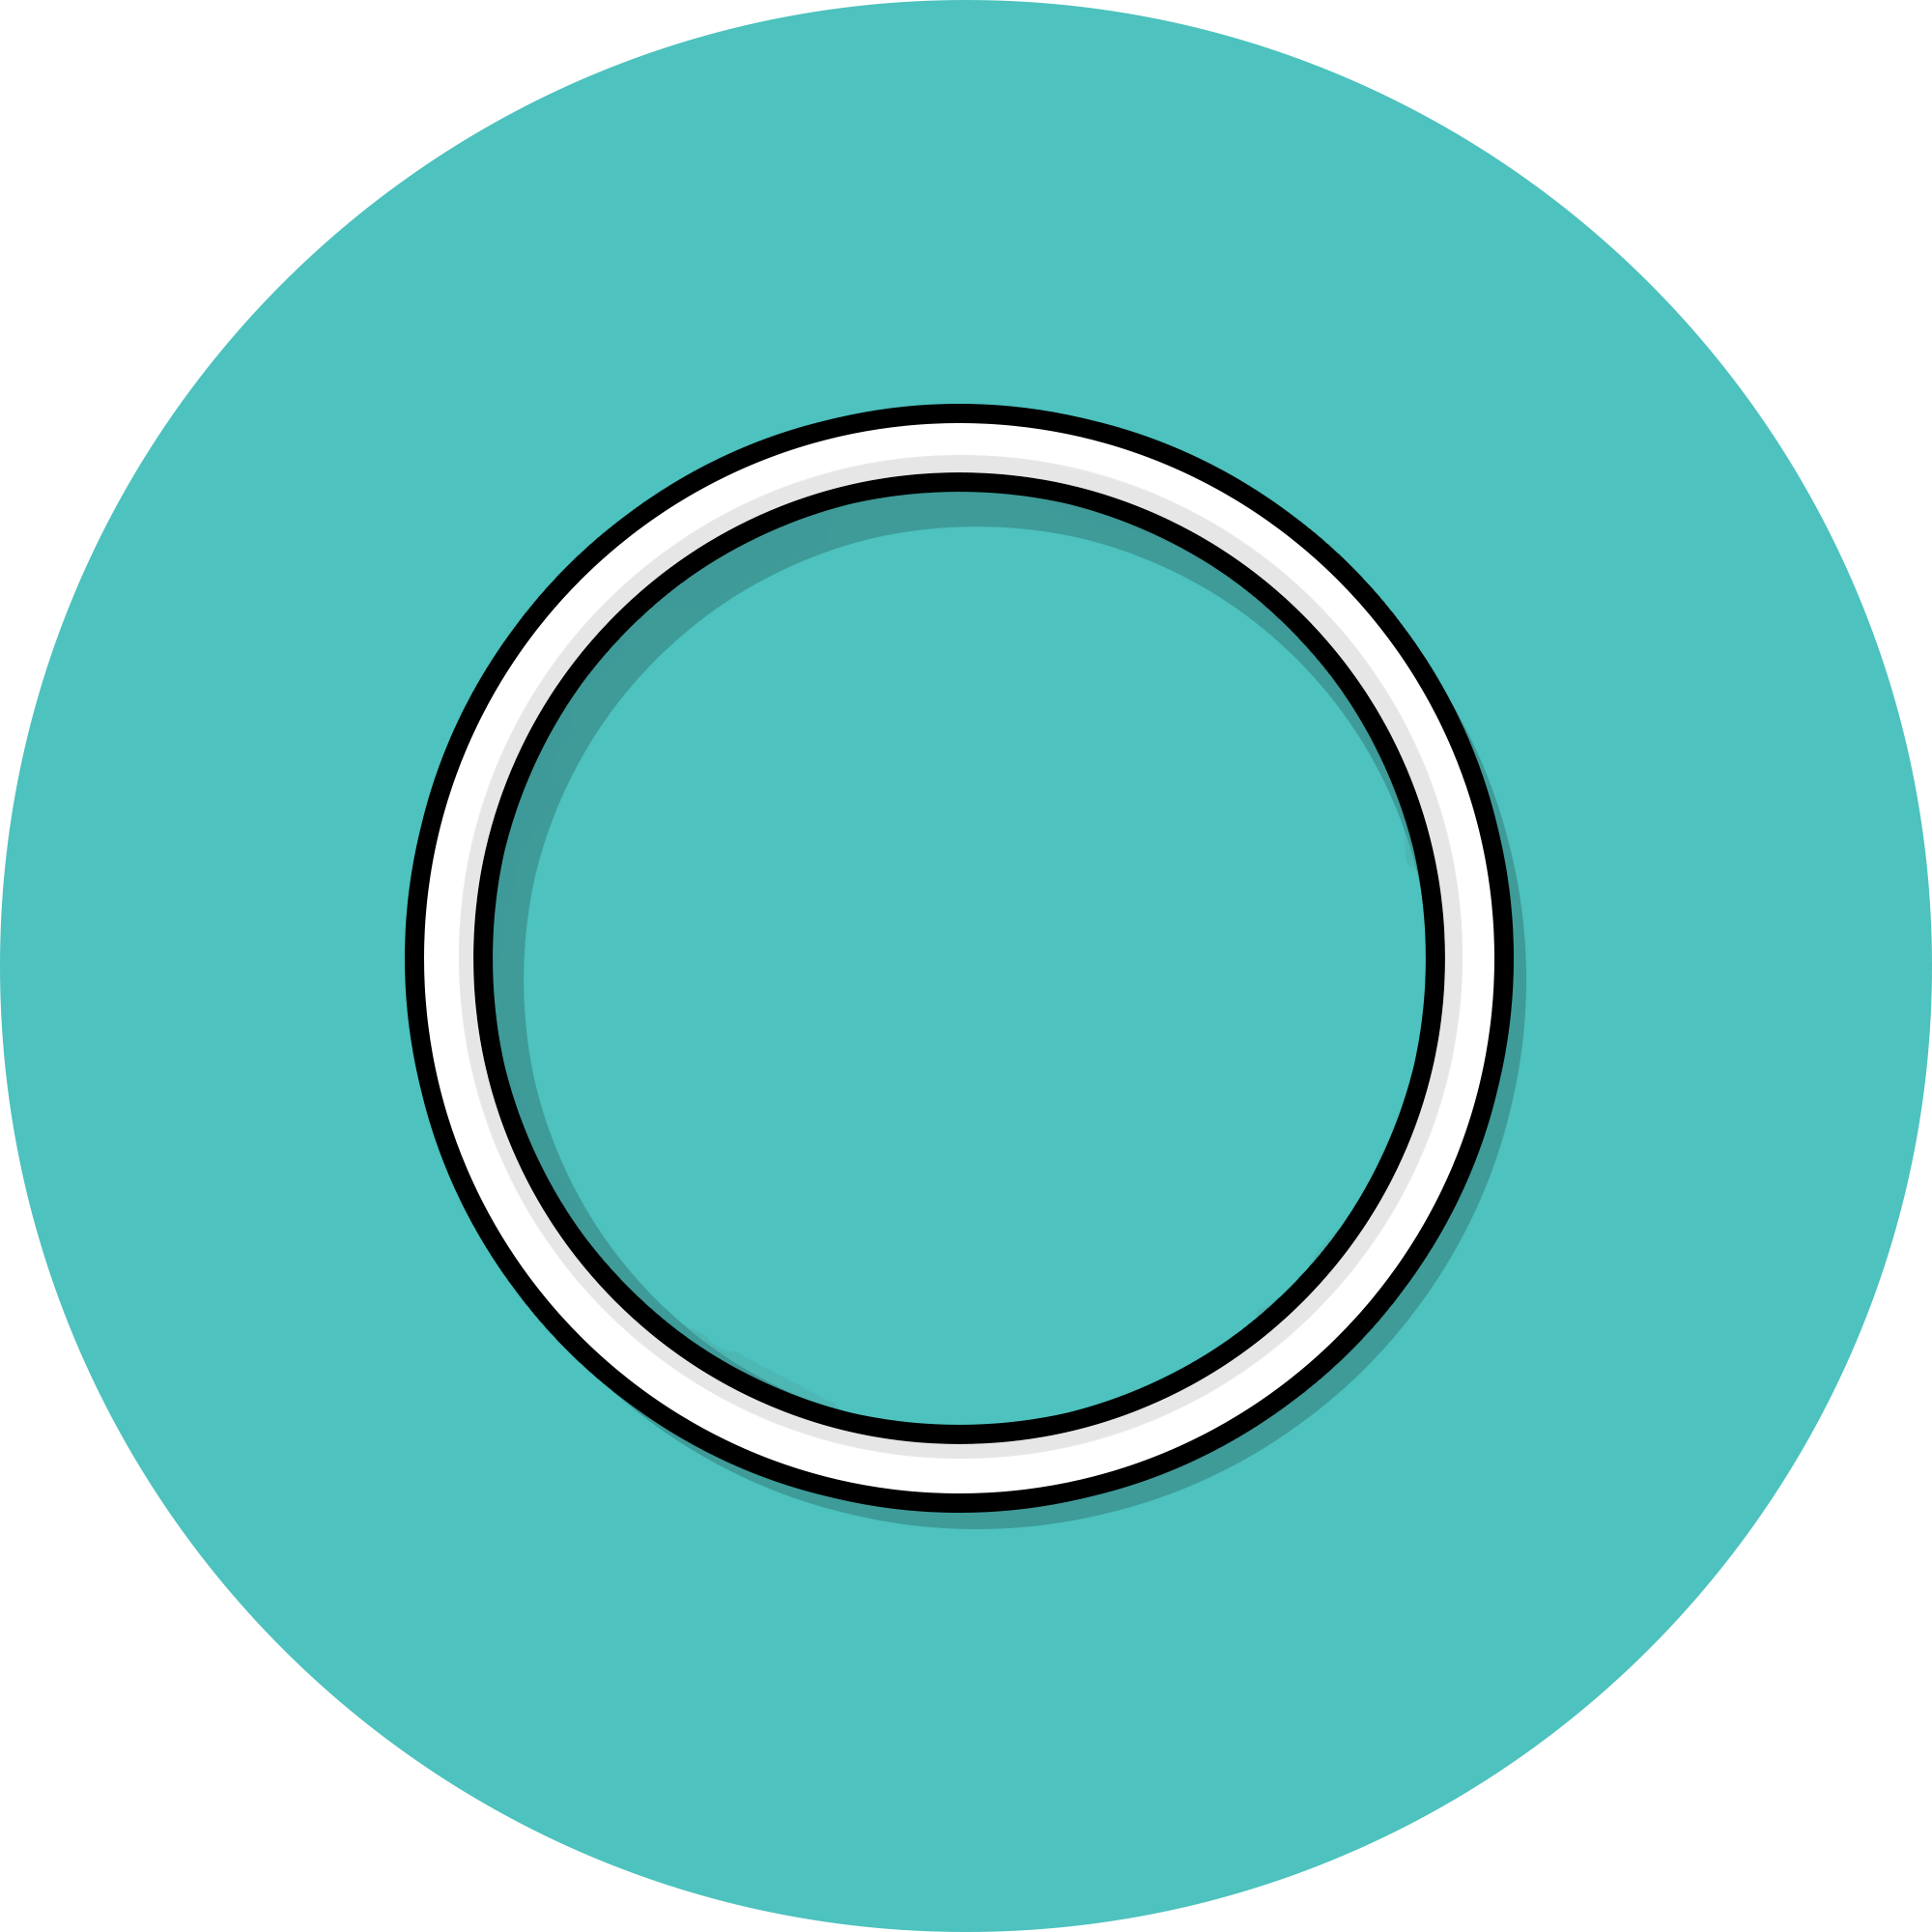 Circle, Green, Turquoise, Aqua, Clip art, Symbol, Oval, 